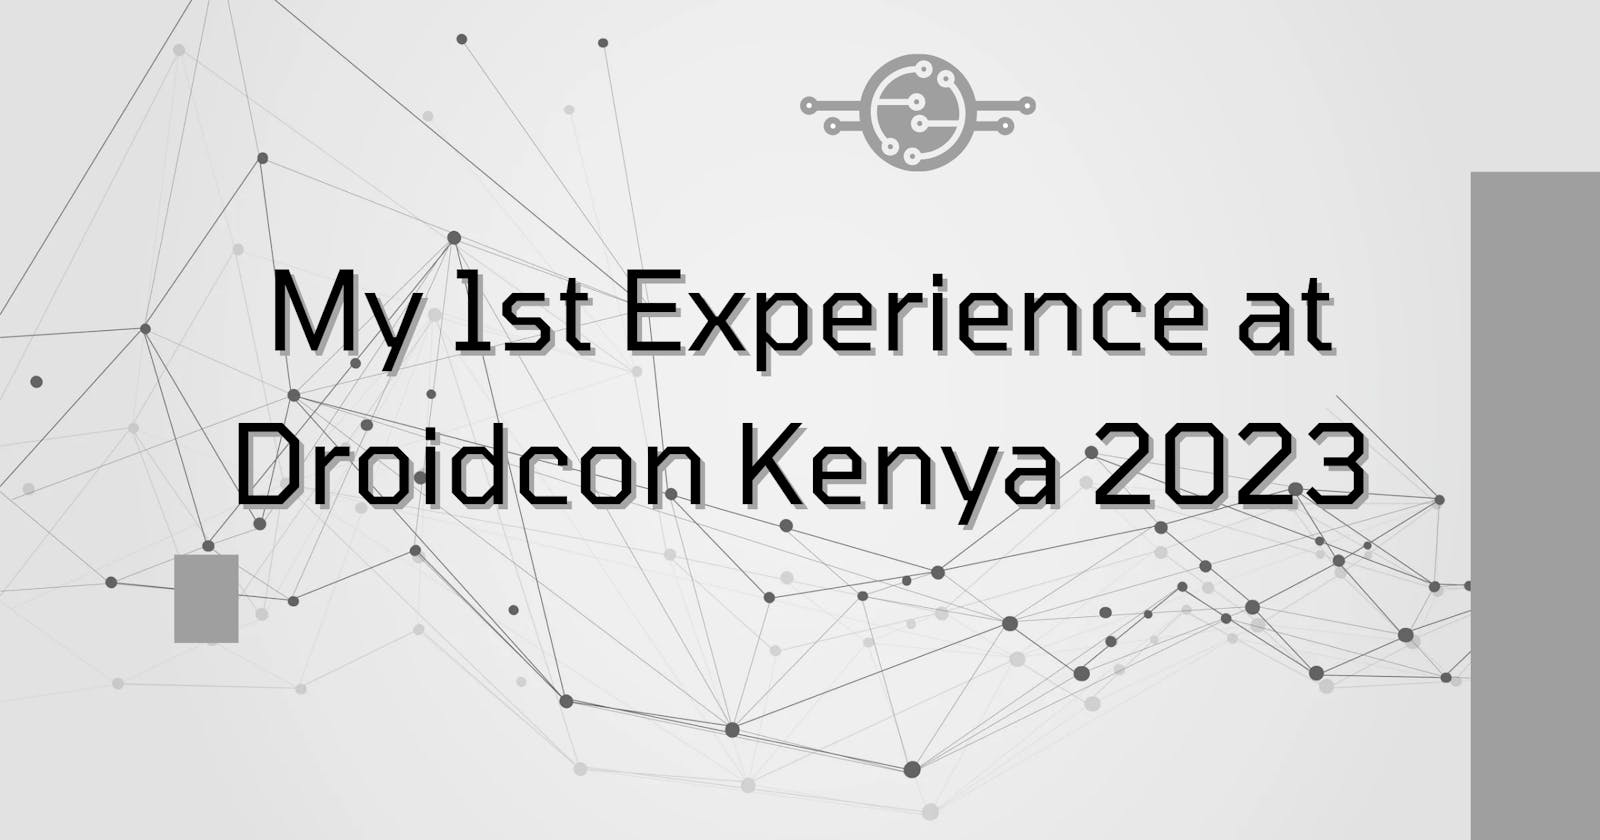 My 1st Experience at Droidcon Kenya